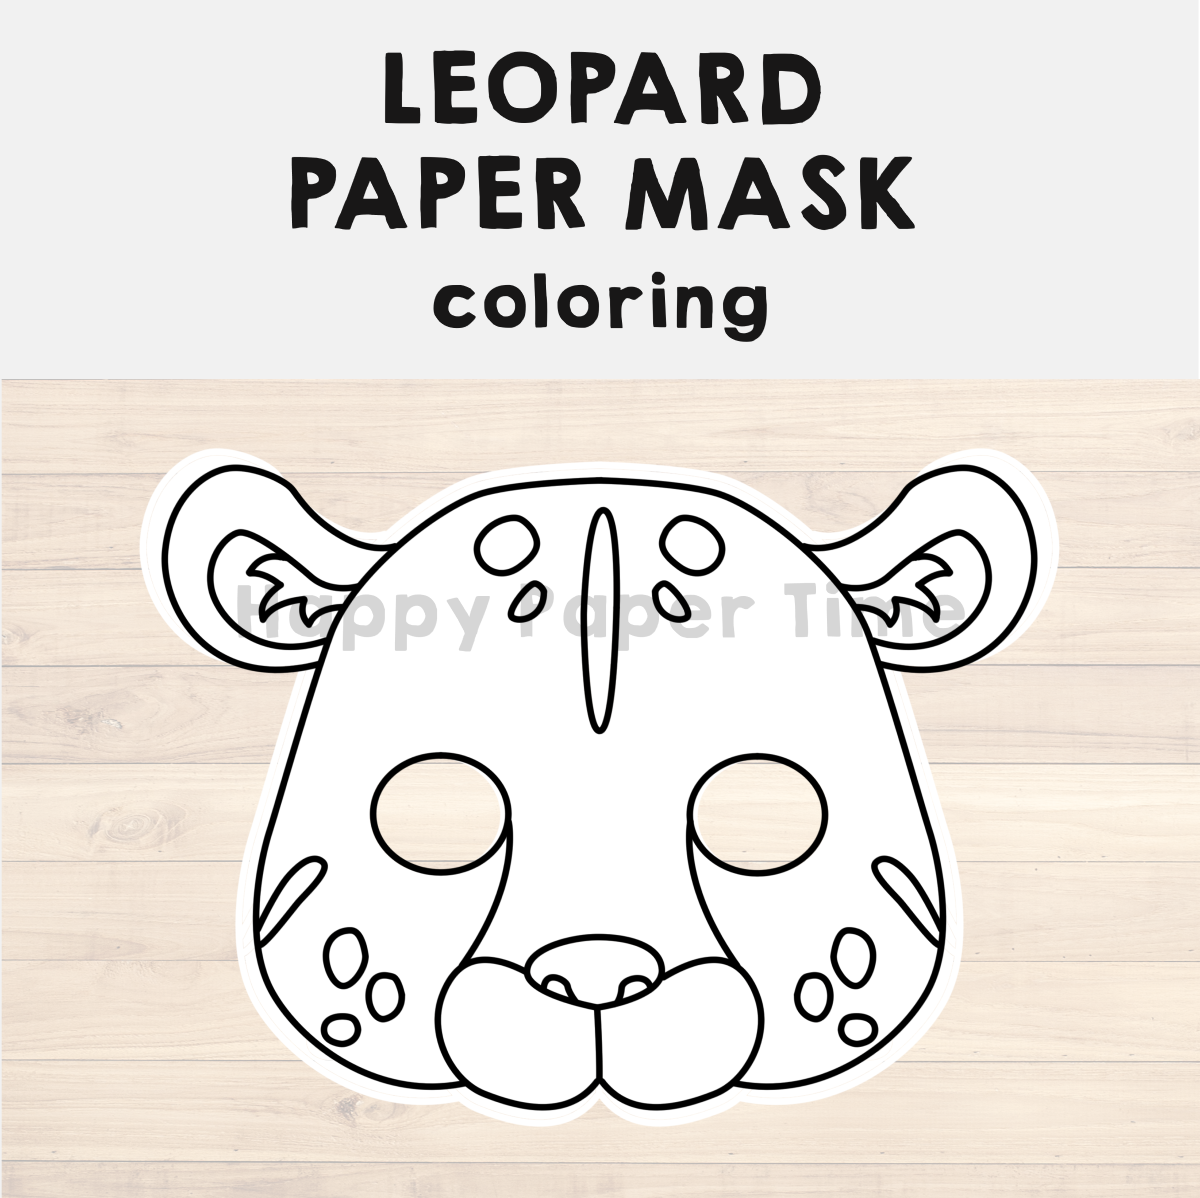 Leopard jaguar paper mask jungle printable animal coloring craft activity made by teachers